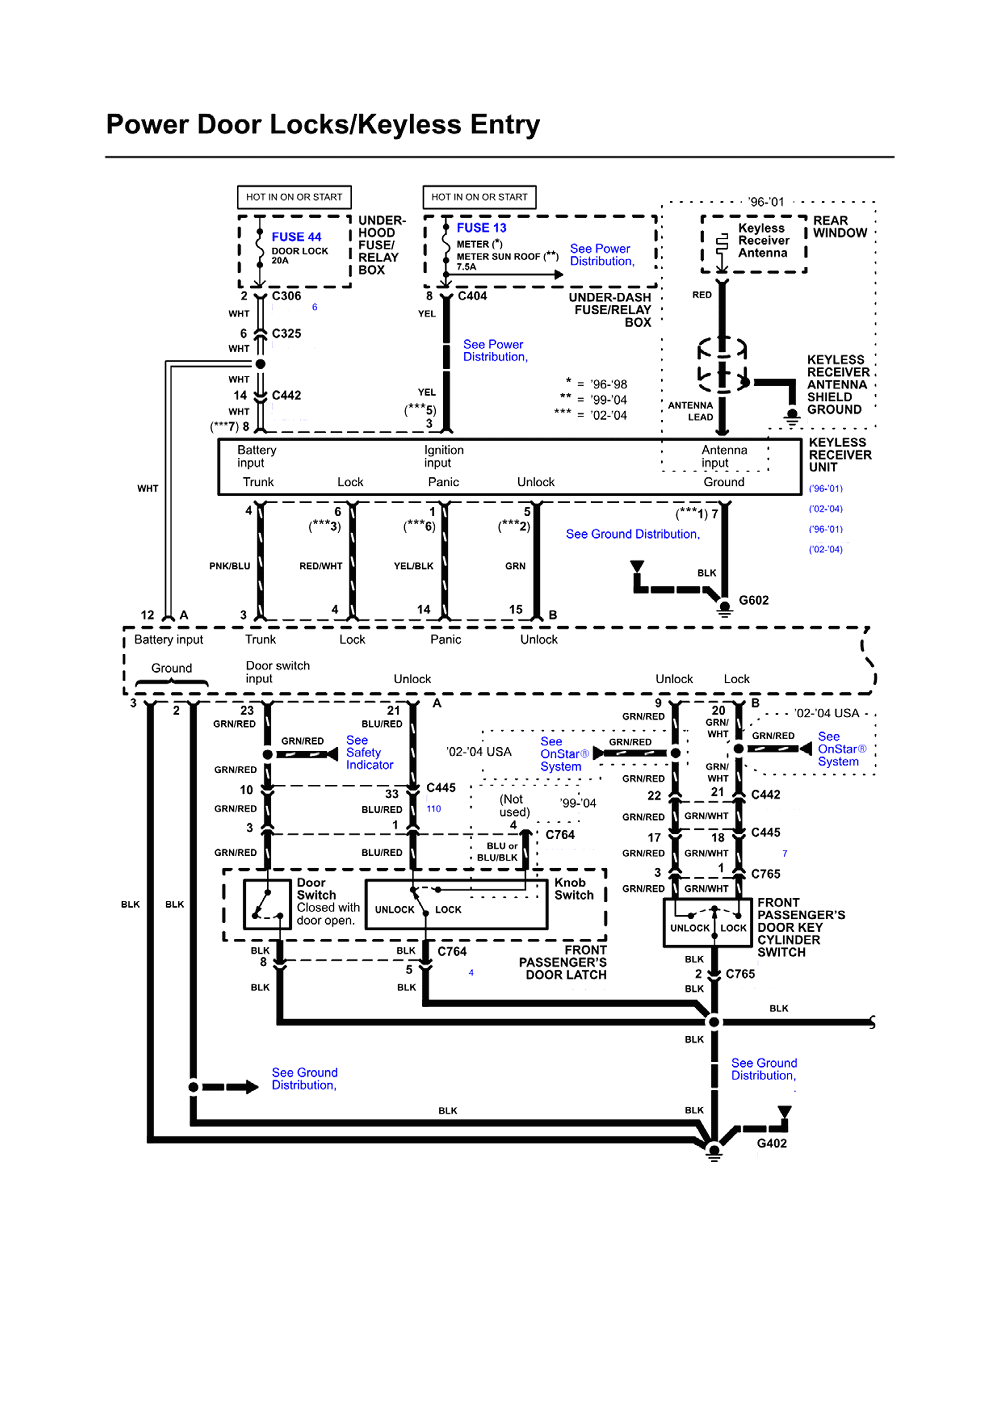 1990 Acura Legend Wiring Diagram Hp Photosmart Printer